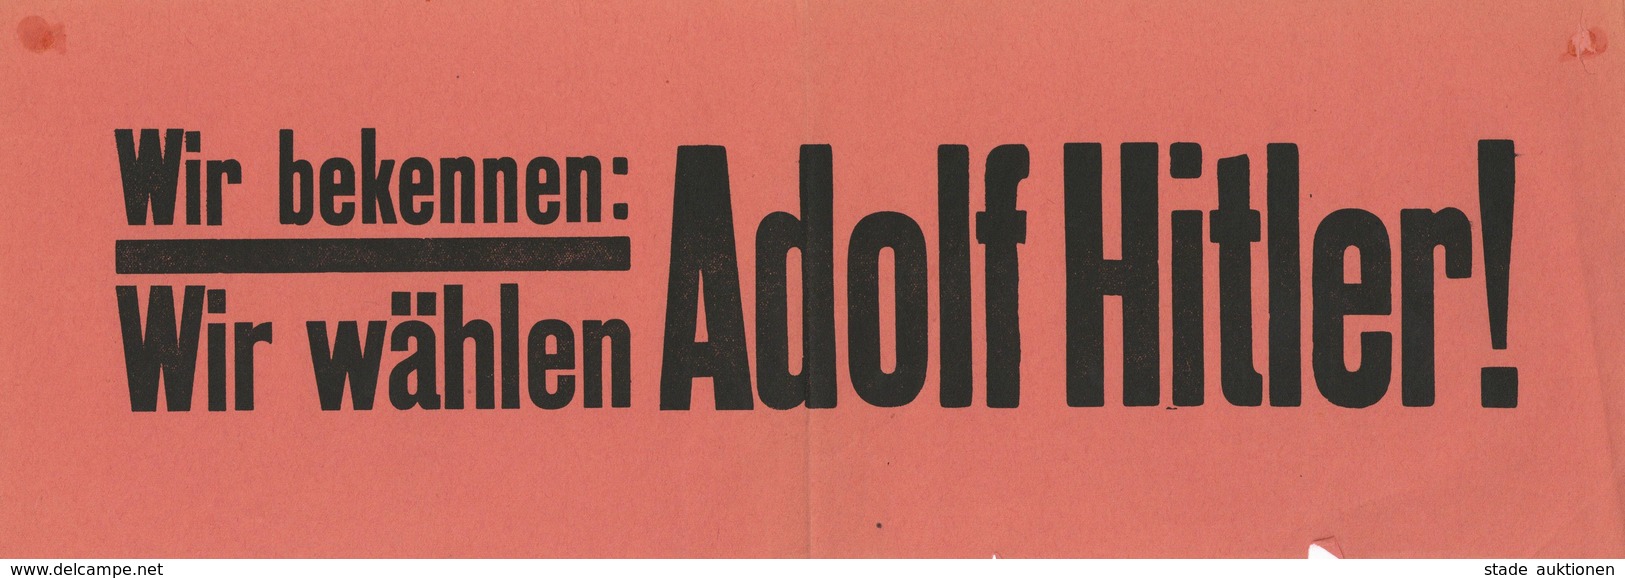 Propaganda WK II Flugblatt / Plakat Adolf Hitler 42,5 X 15 Cm I-II - War 1939-45